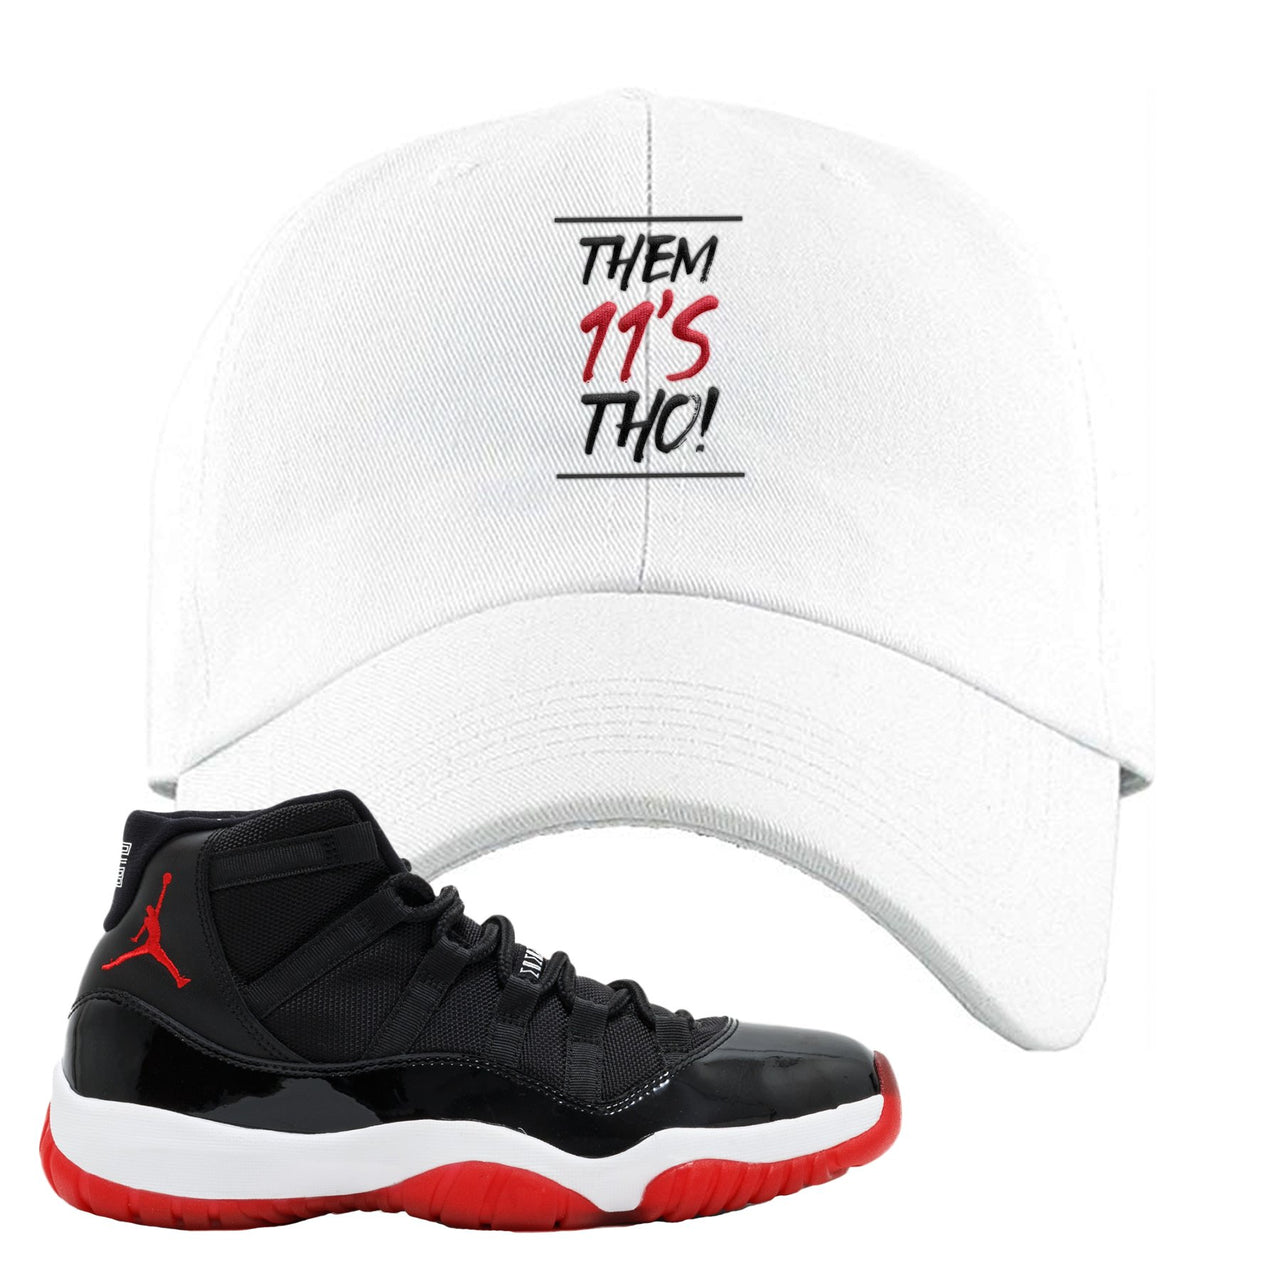 Jordan 11 Bred Them 11s Tho! White Sneaker Hook Up Dad Hat